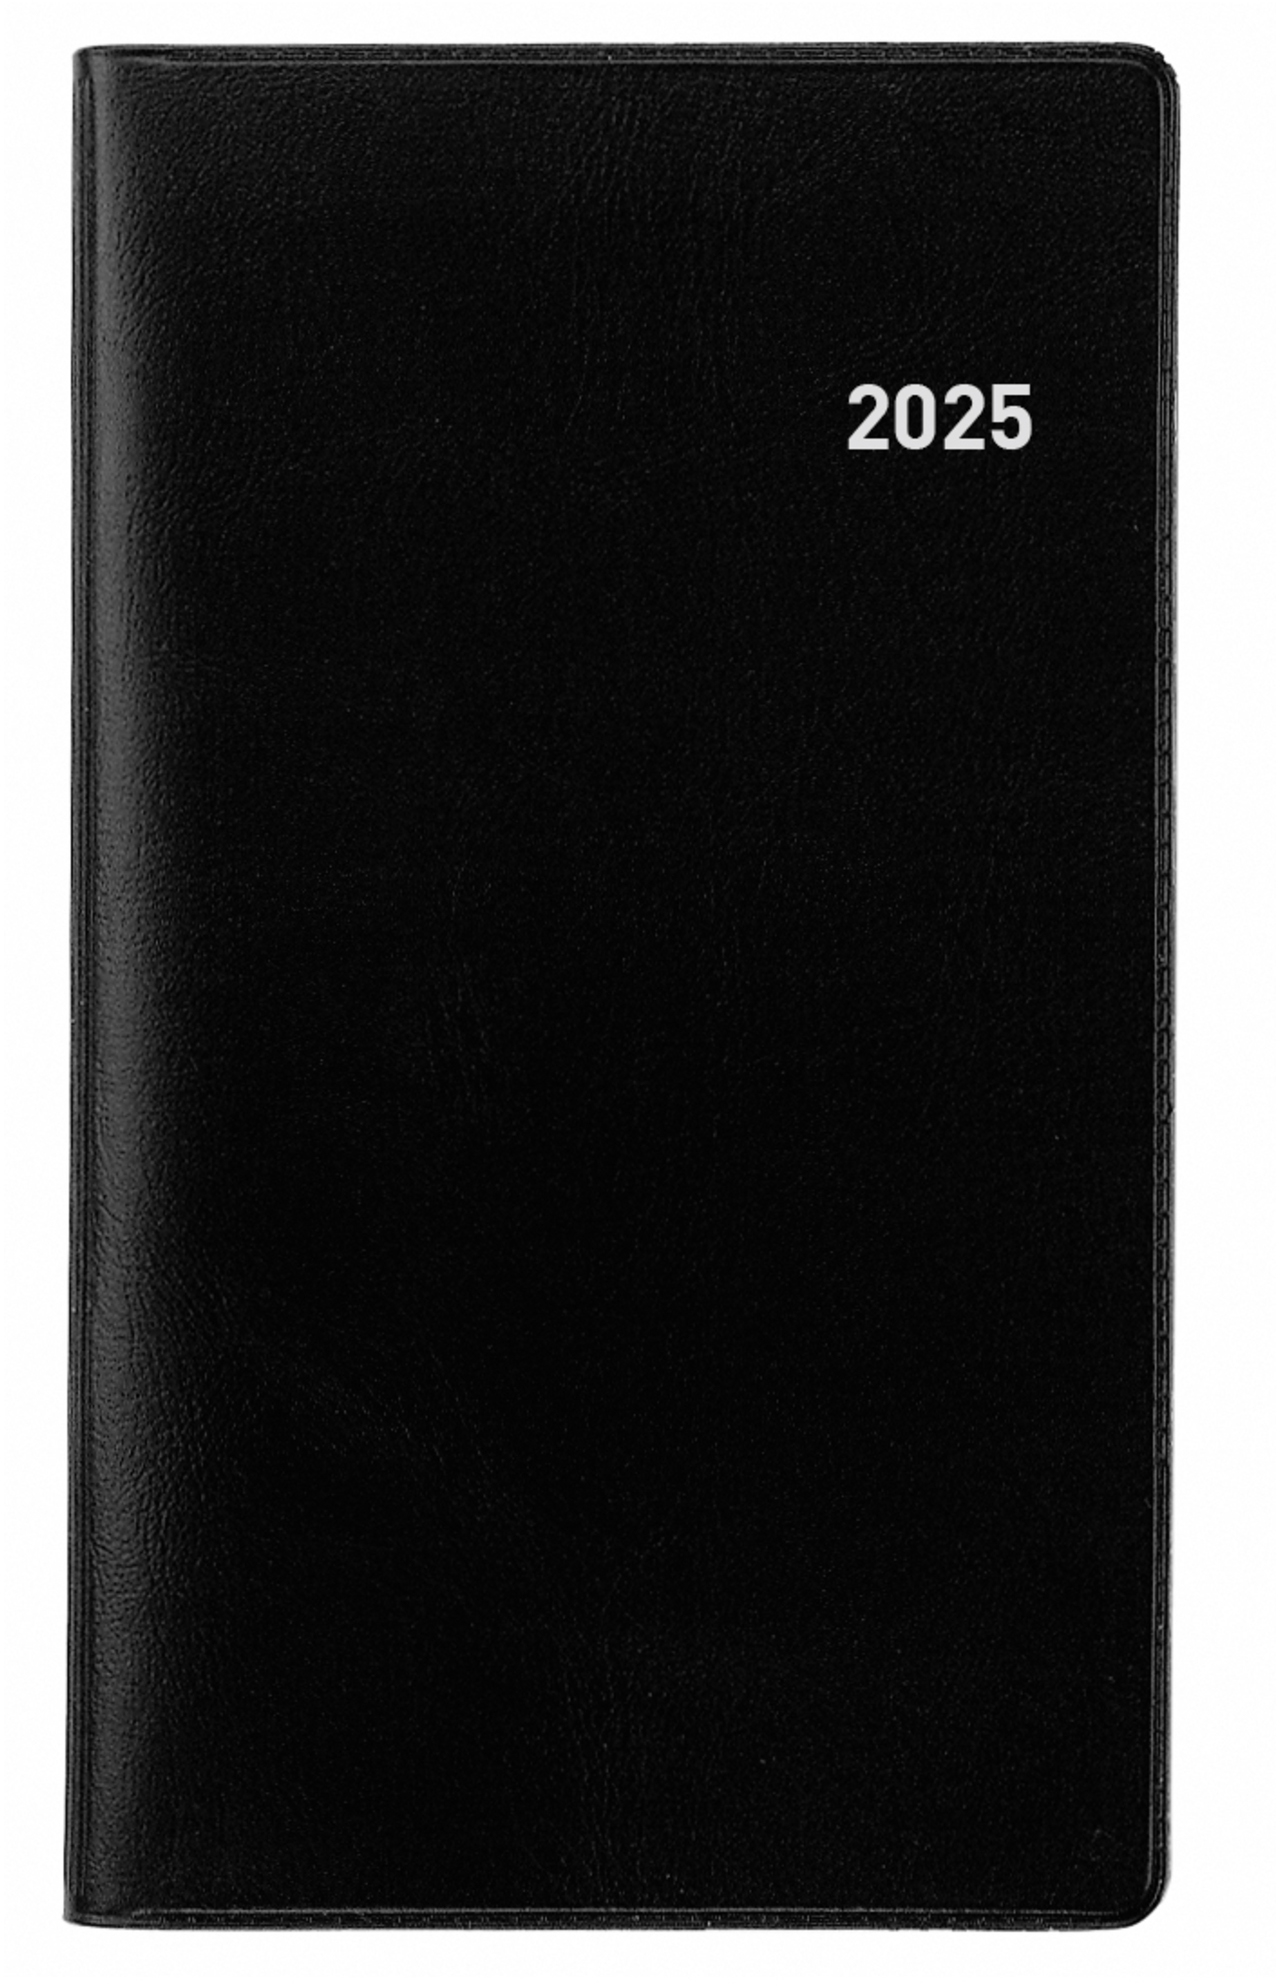 BIELLA Agenda Berlin 2025 851561020025 6M/2P noir ML 8.7x15.3cm